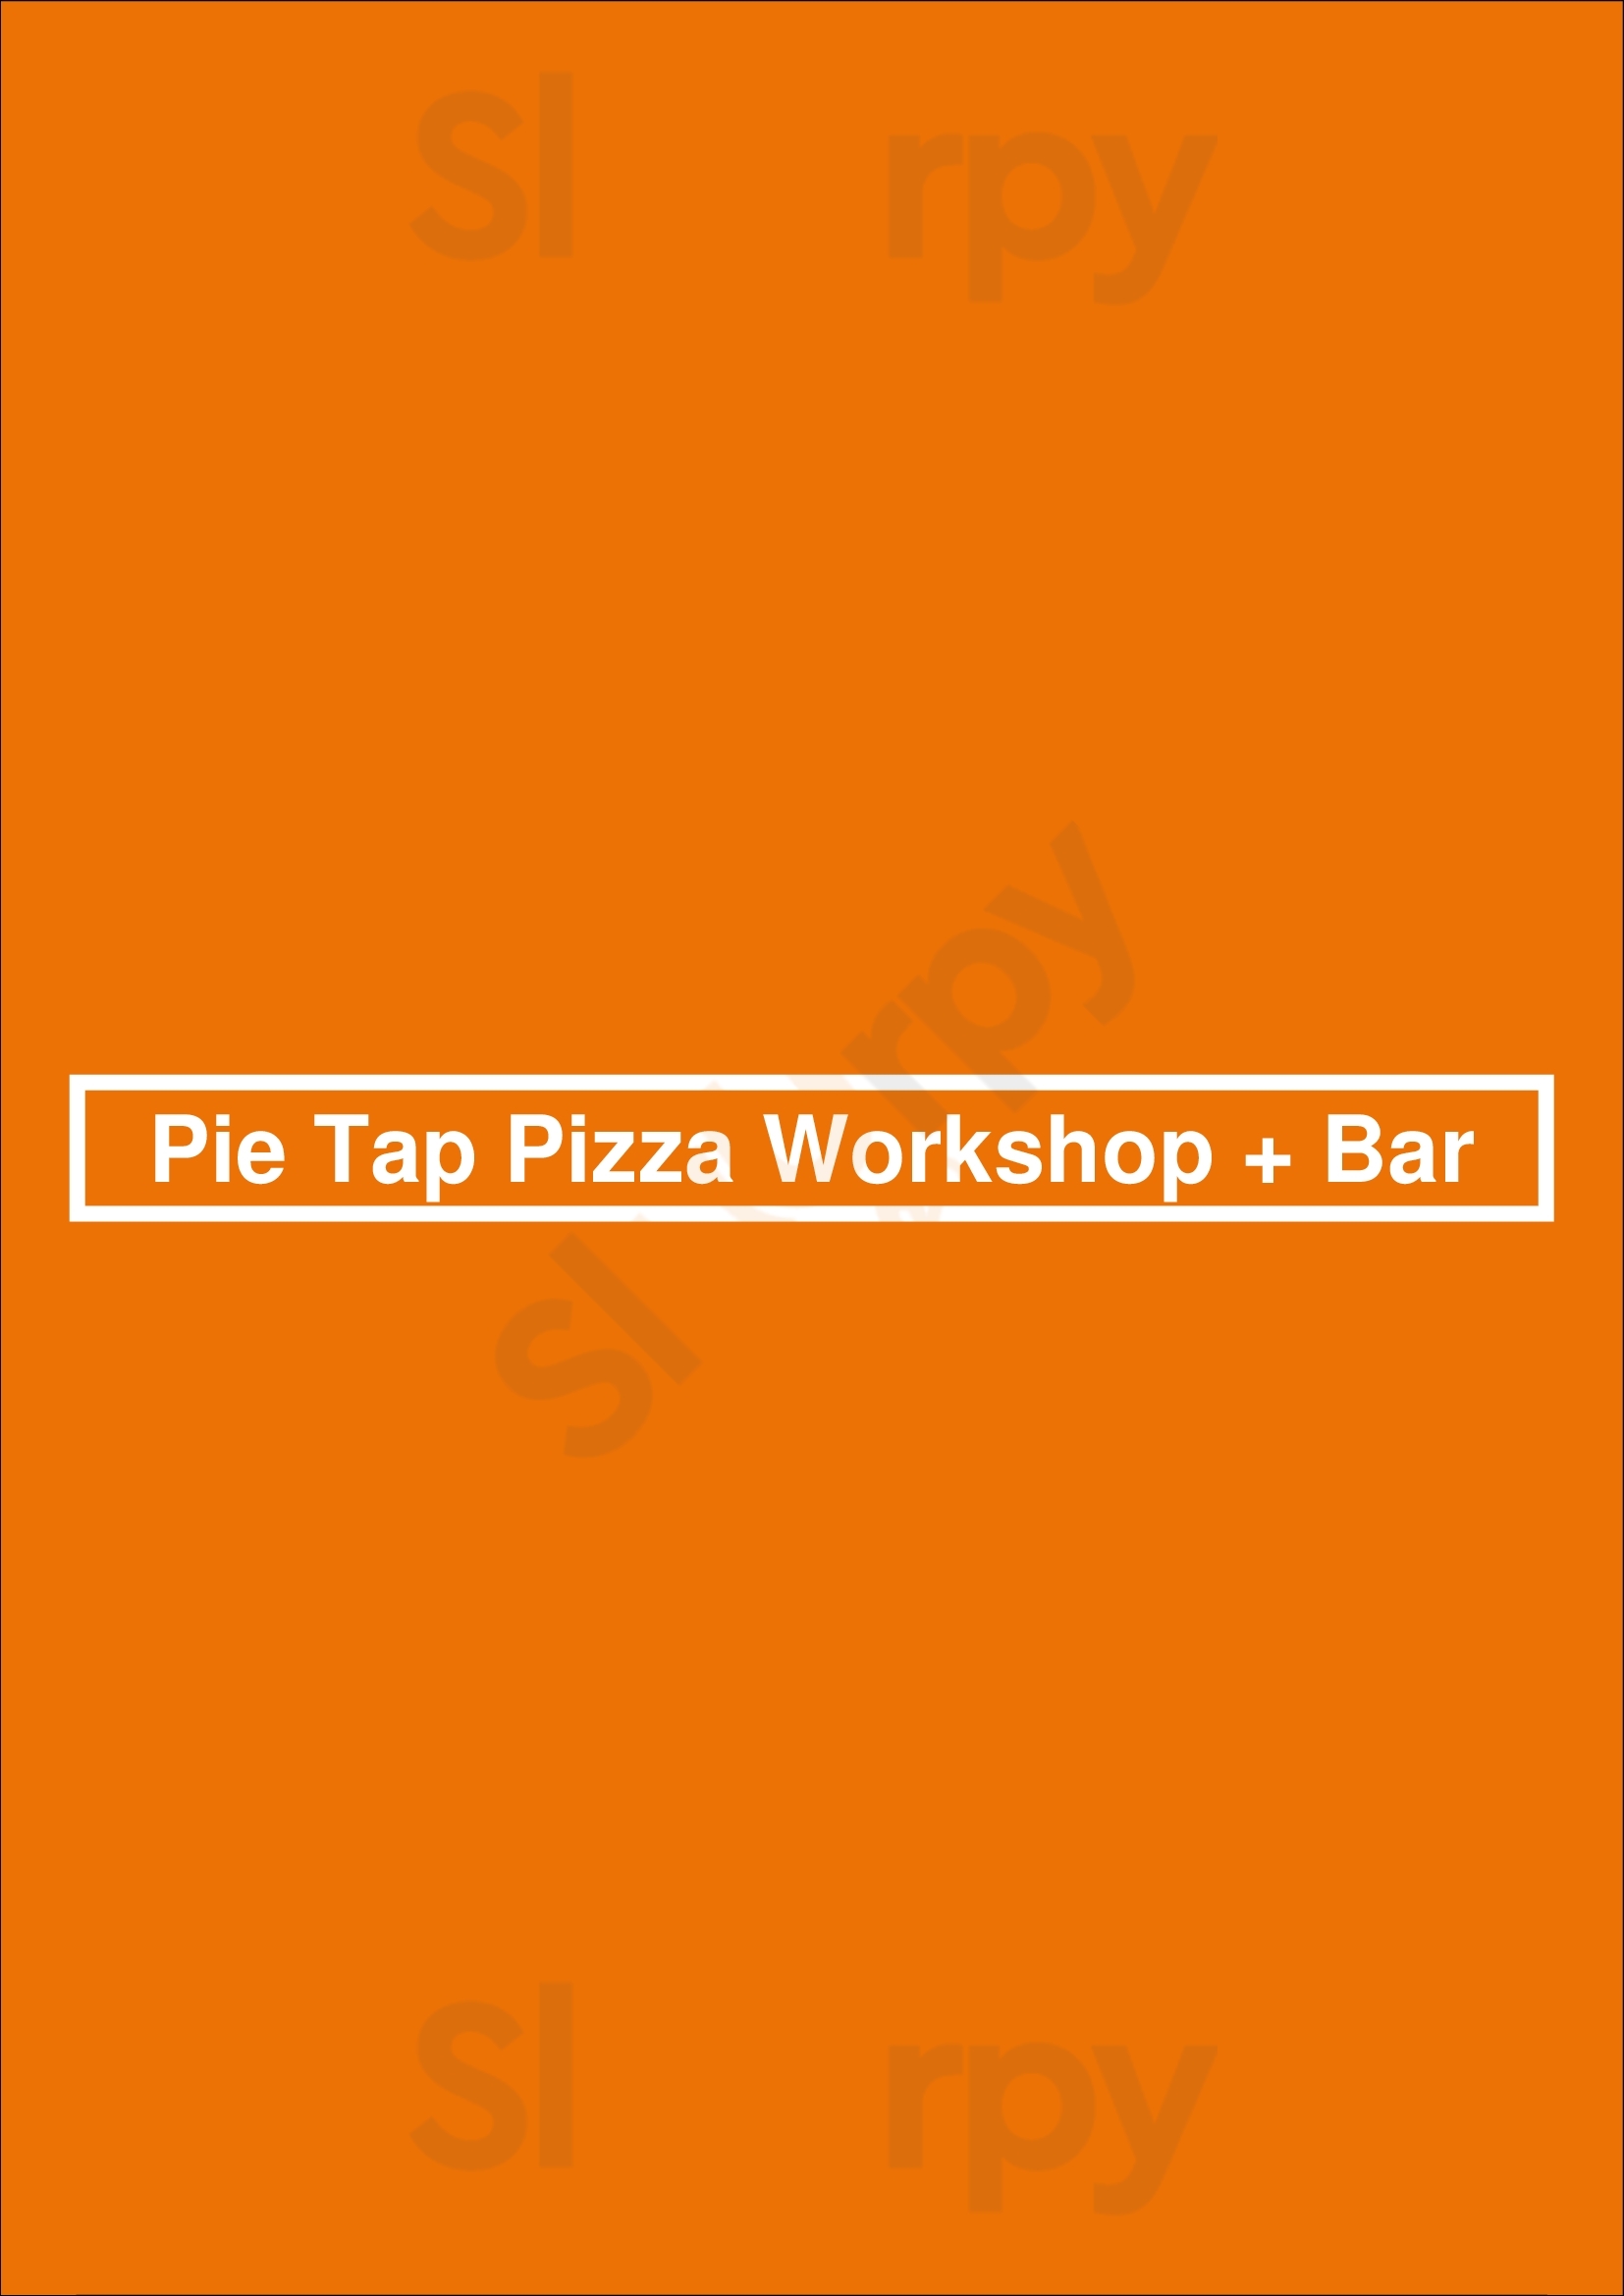 Pie Tap Pizza Workshop + Bar Dallas Menu - 1